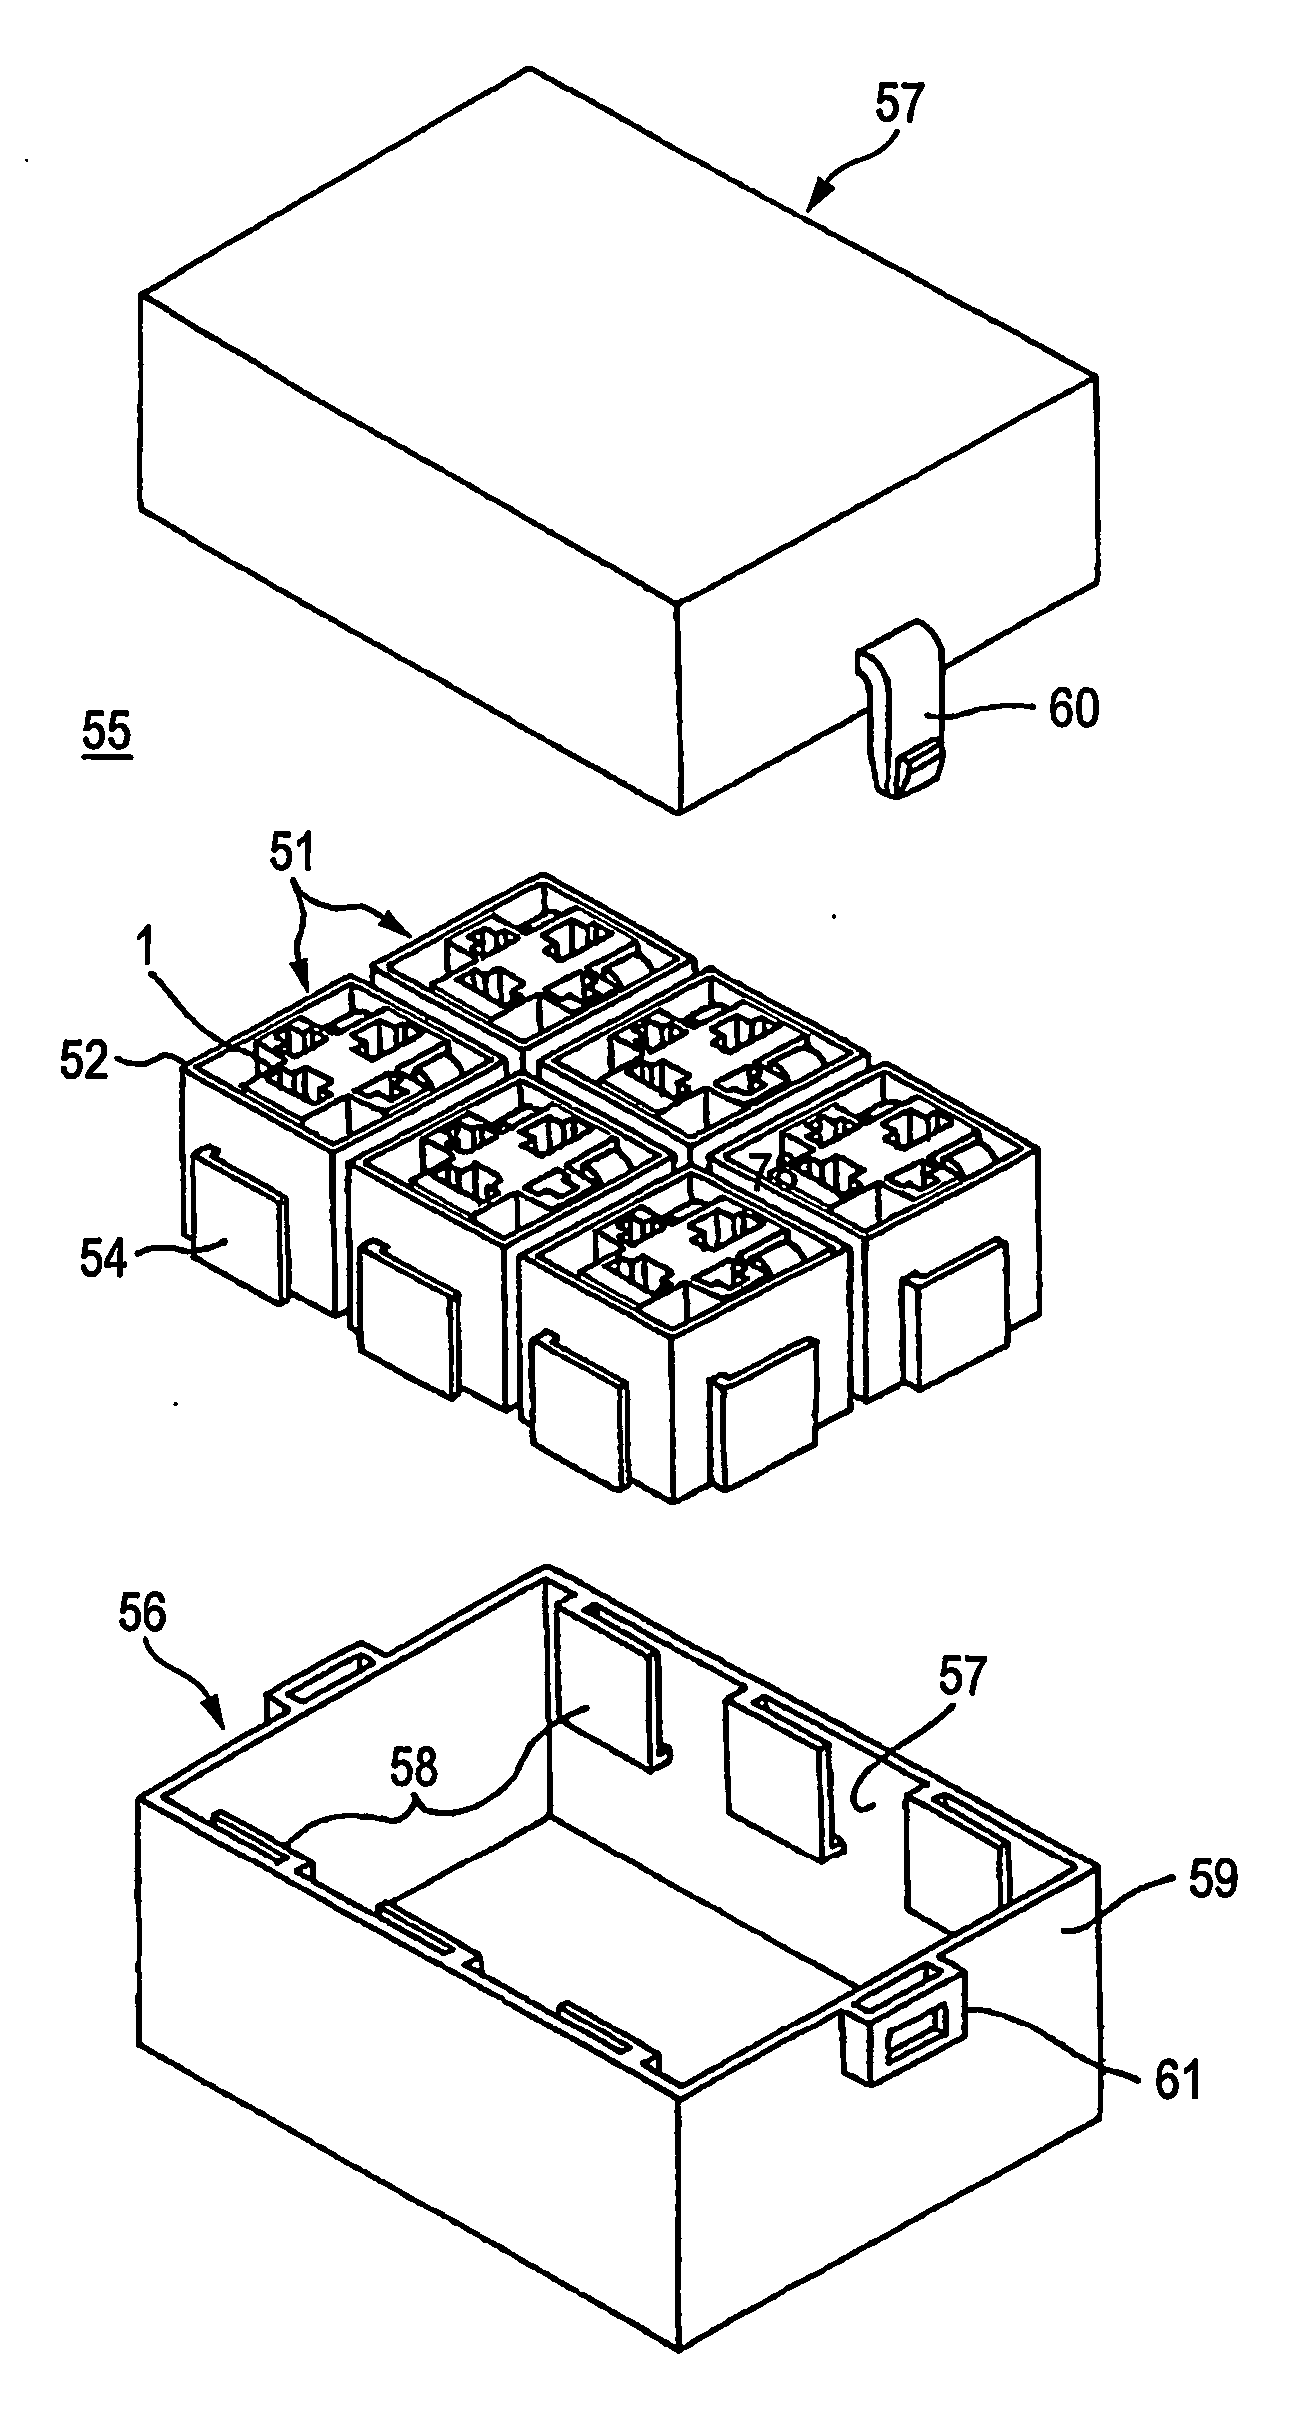 Cassette relay block attachment structure